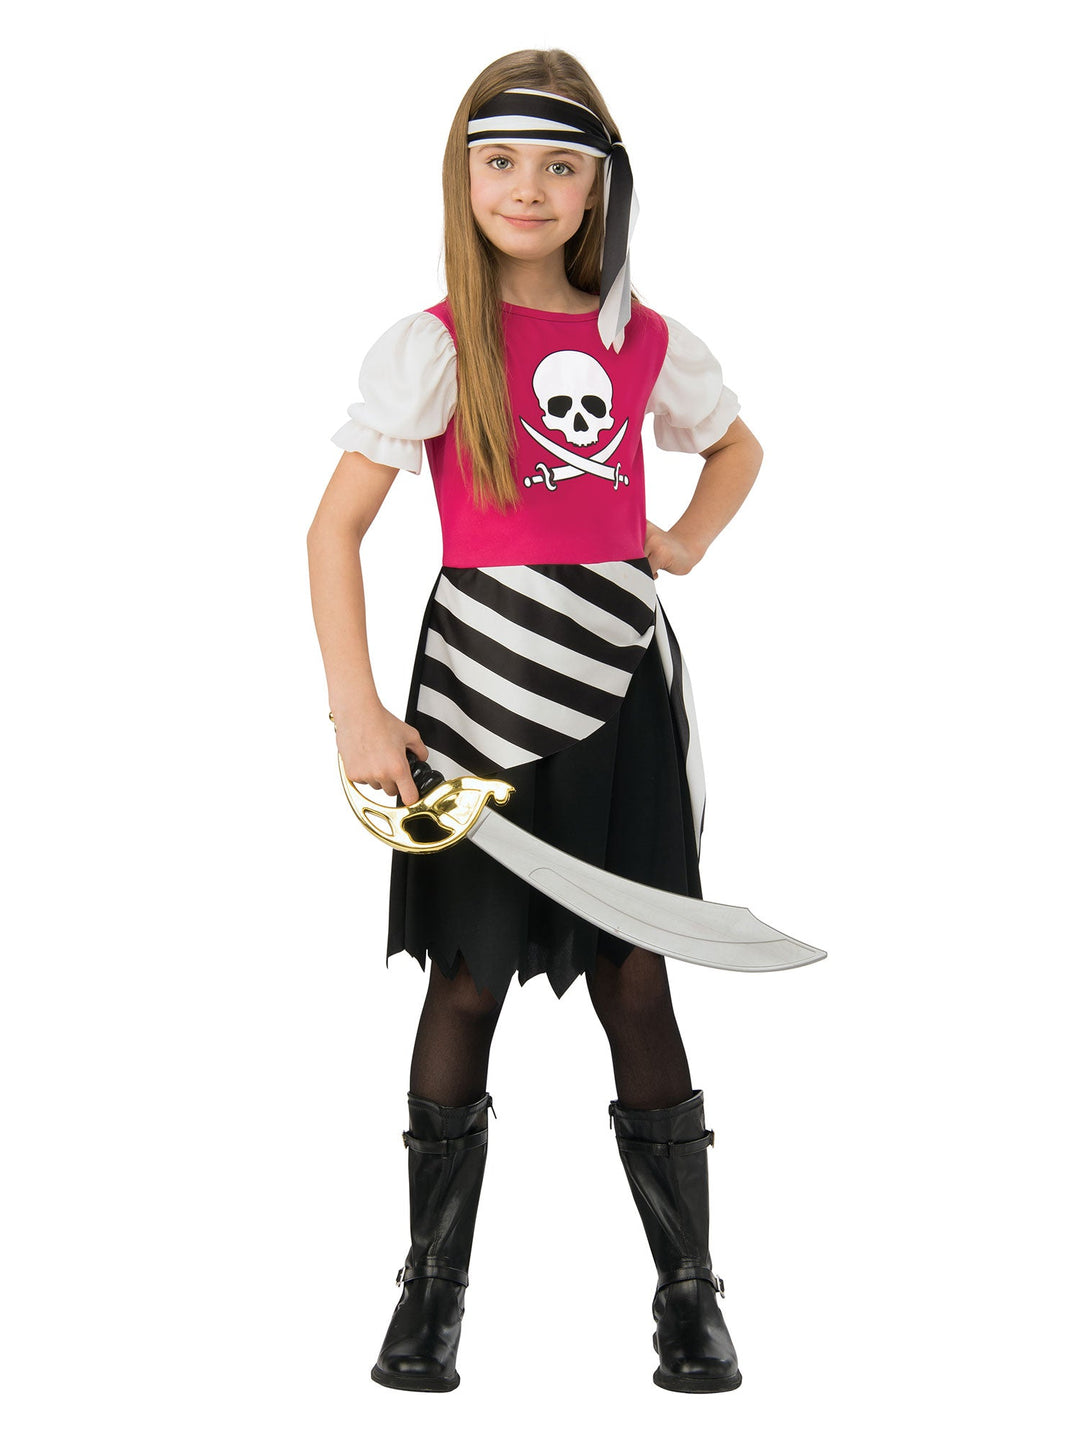 Pirate Girl Costume Pink Skull and Crossbones Top